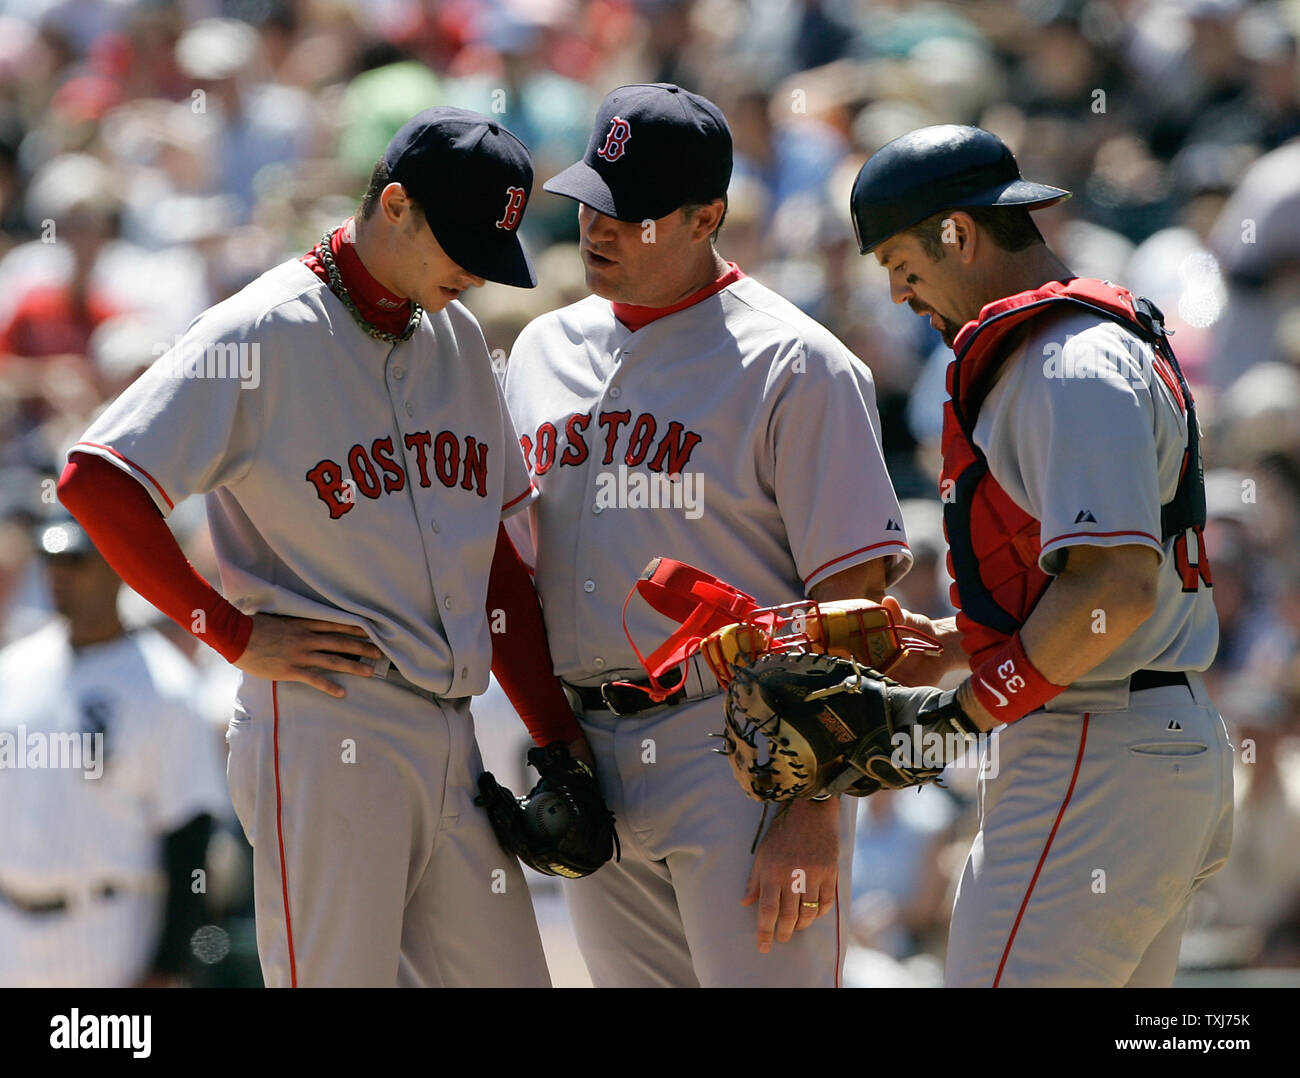 Boston Red Sox pitching coach John Farrell (C) and catcher Jason